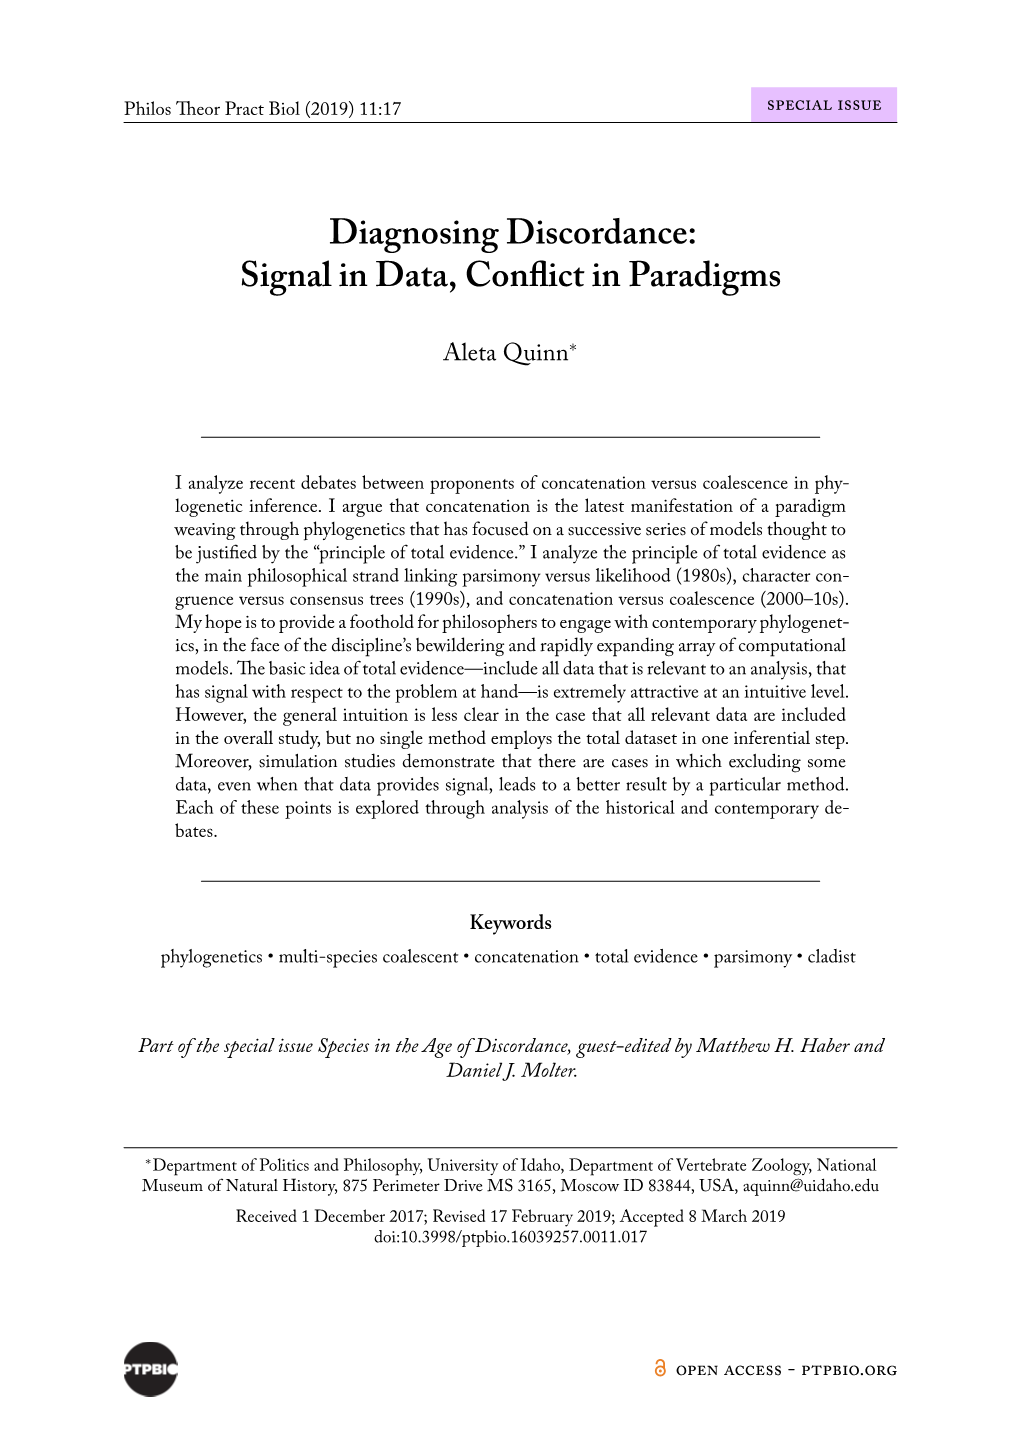 Diagnosing Discordance: Signal in Data, Conflict in Paradigms